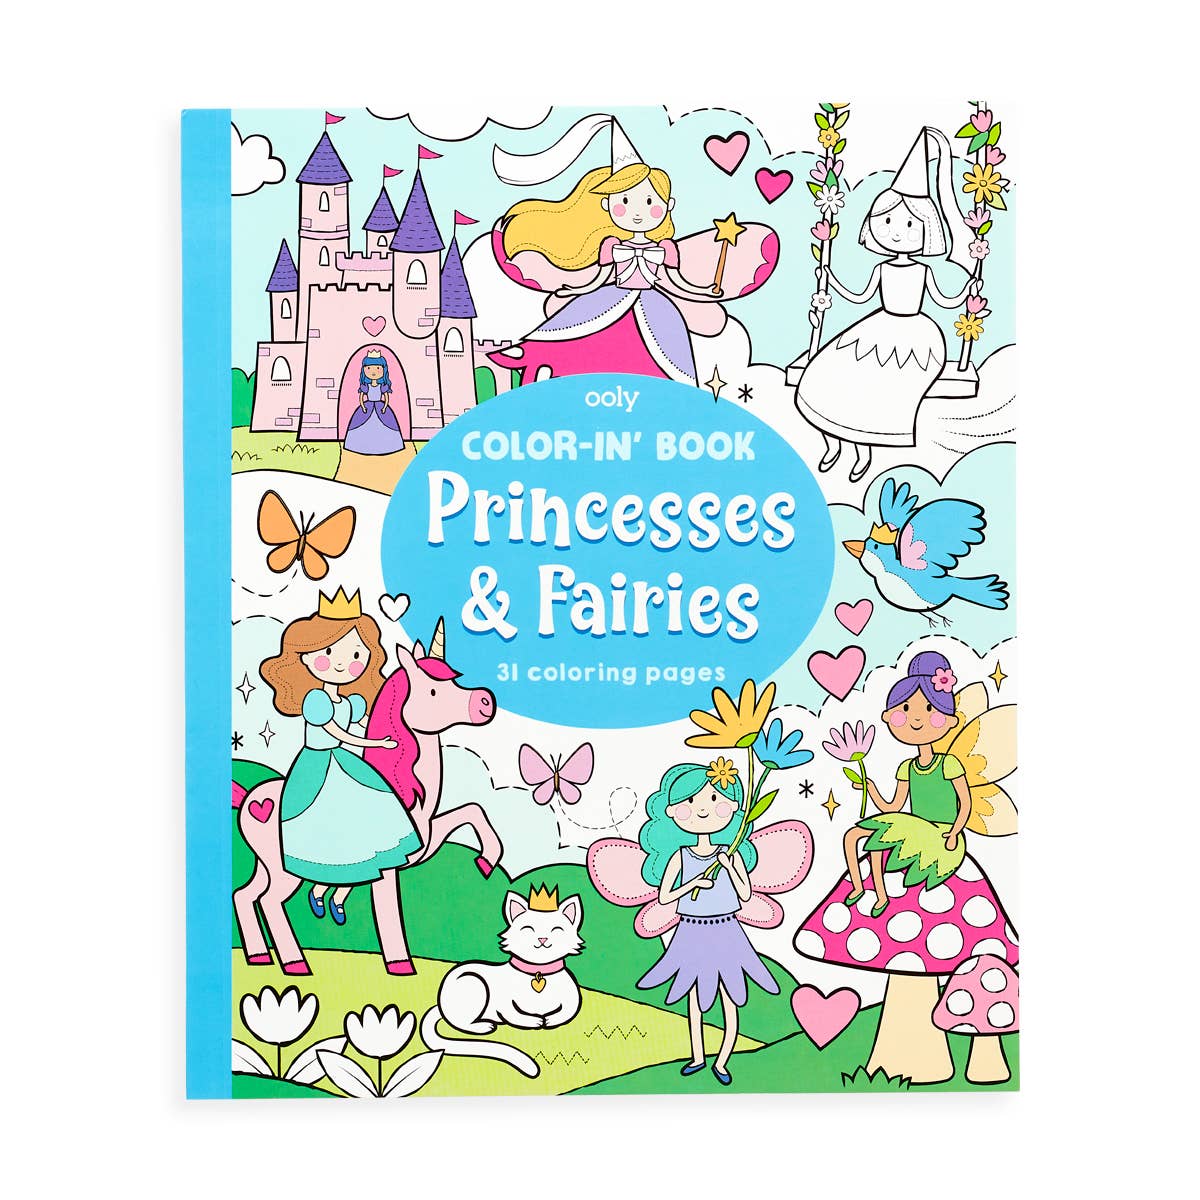 *Princesses & Fairies Color-in' Book